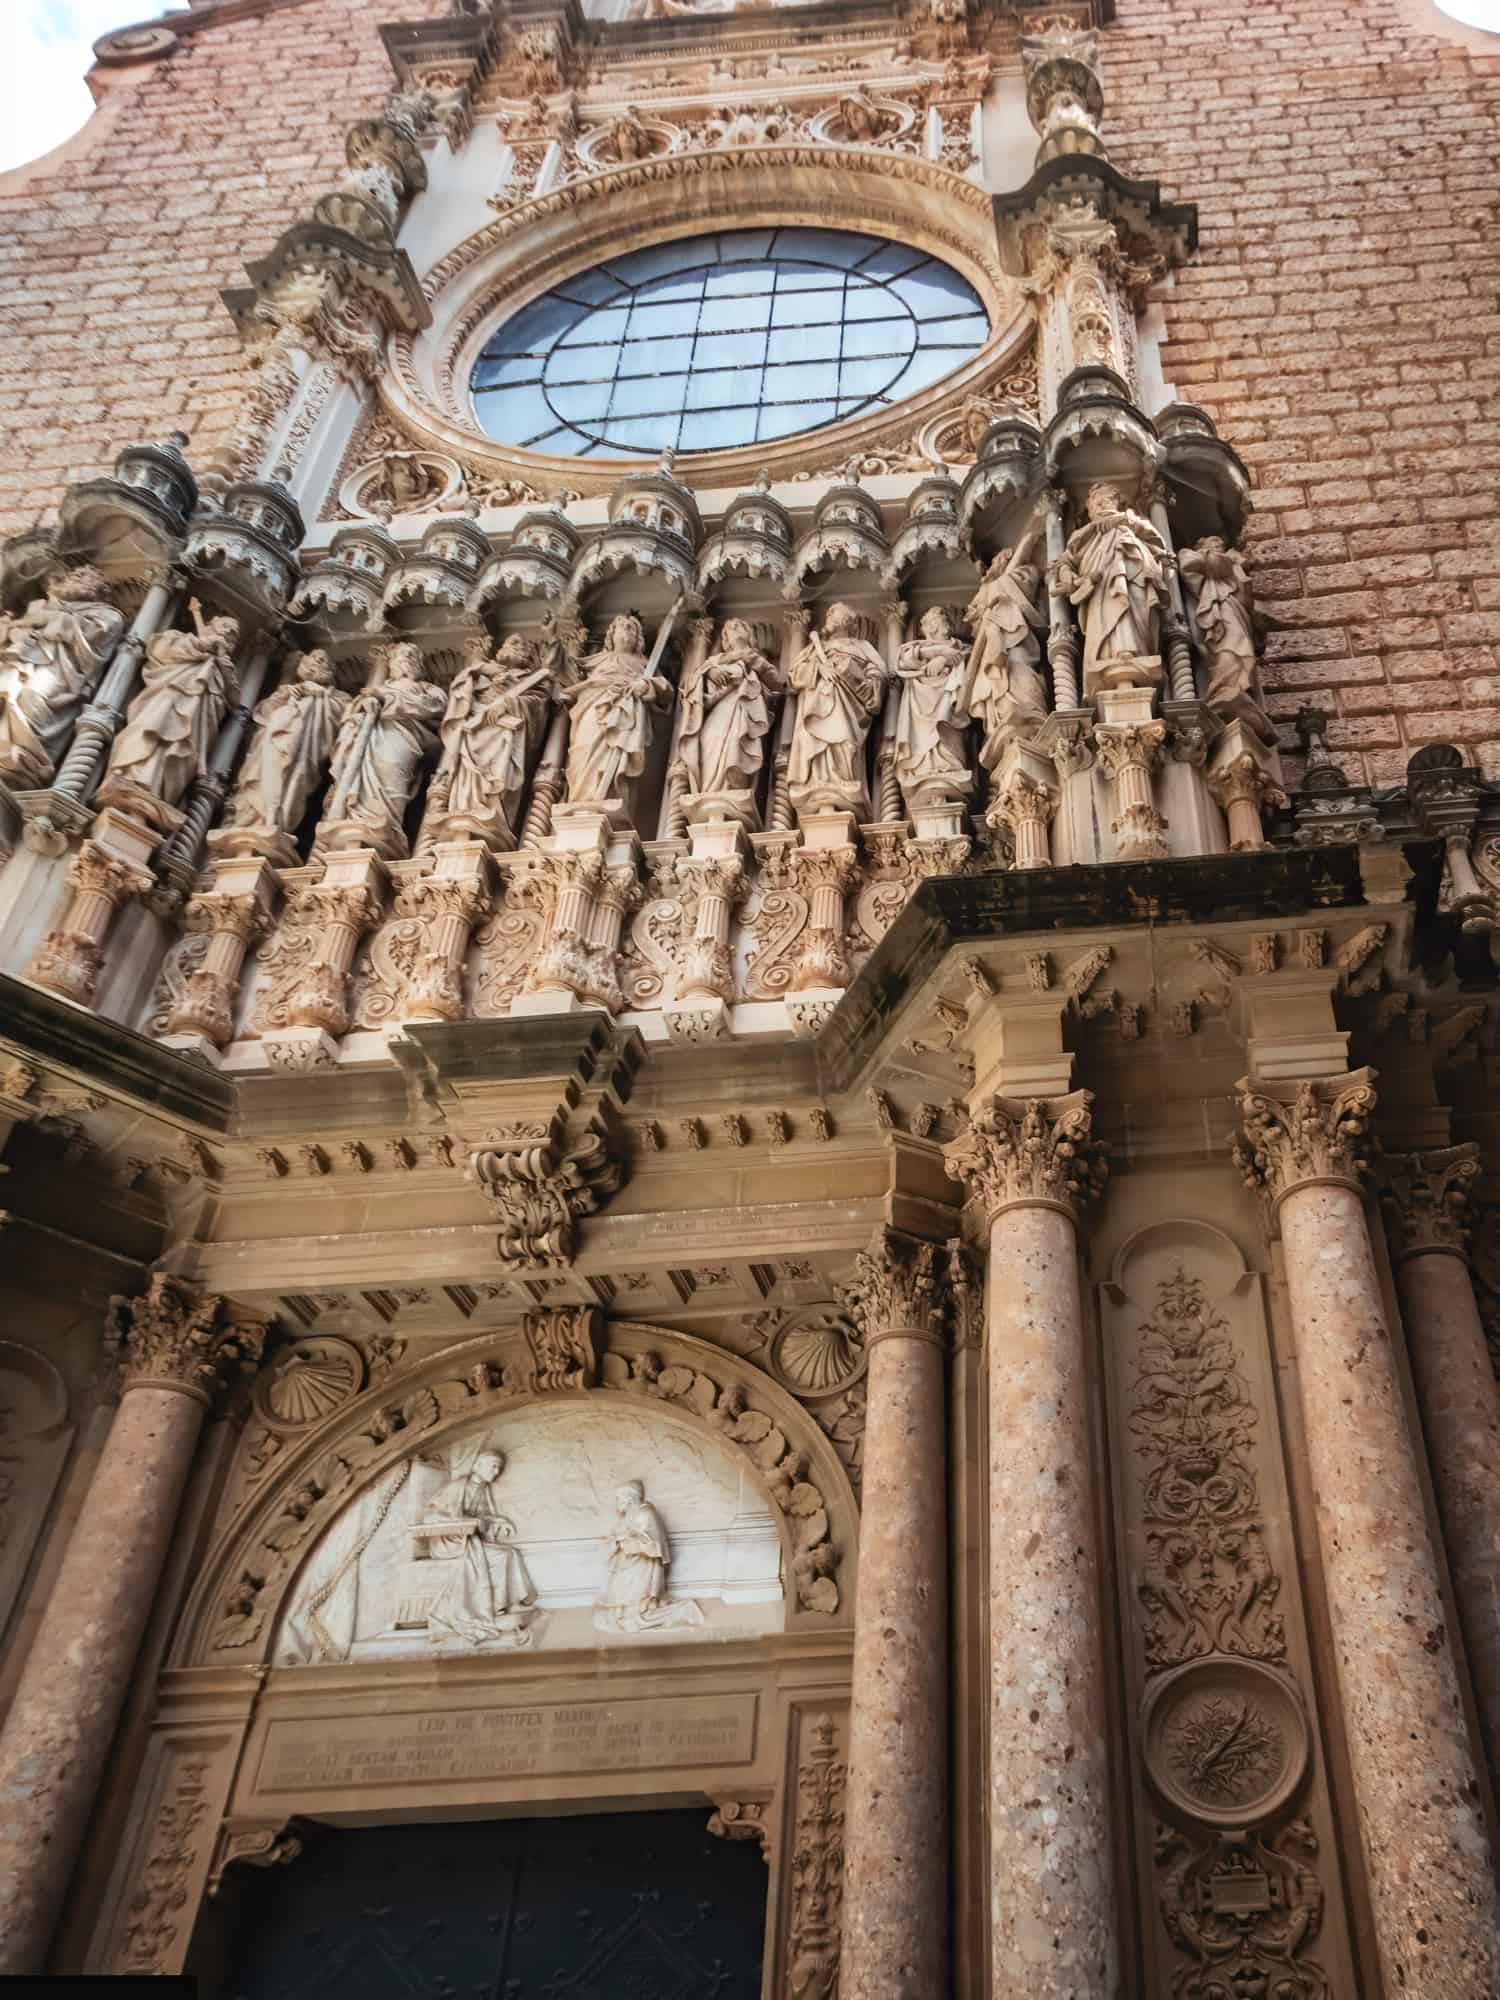 Entrance to the Montserrat Monastery in Catalonia, Spain.